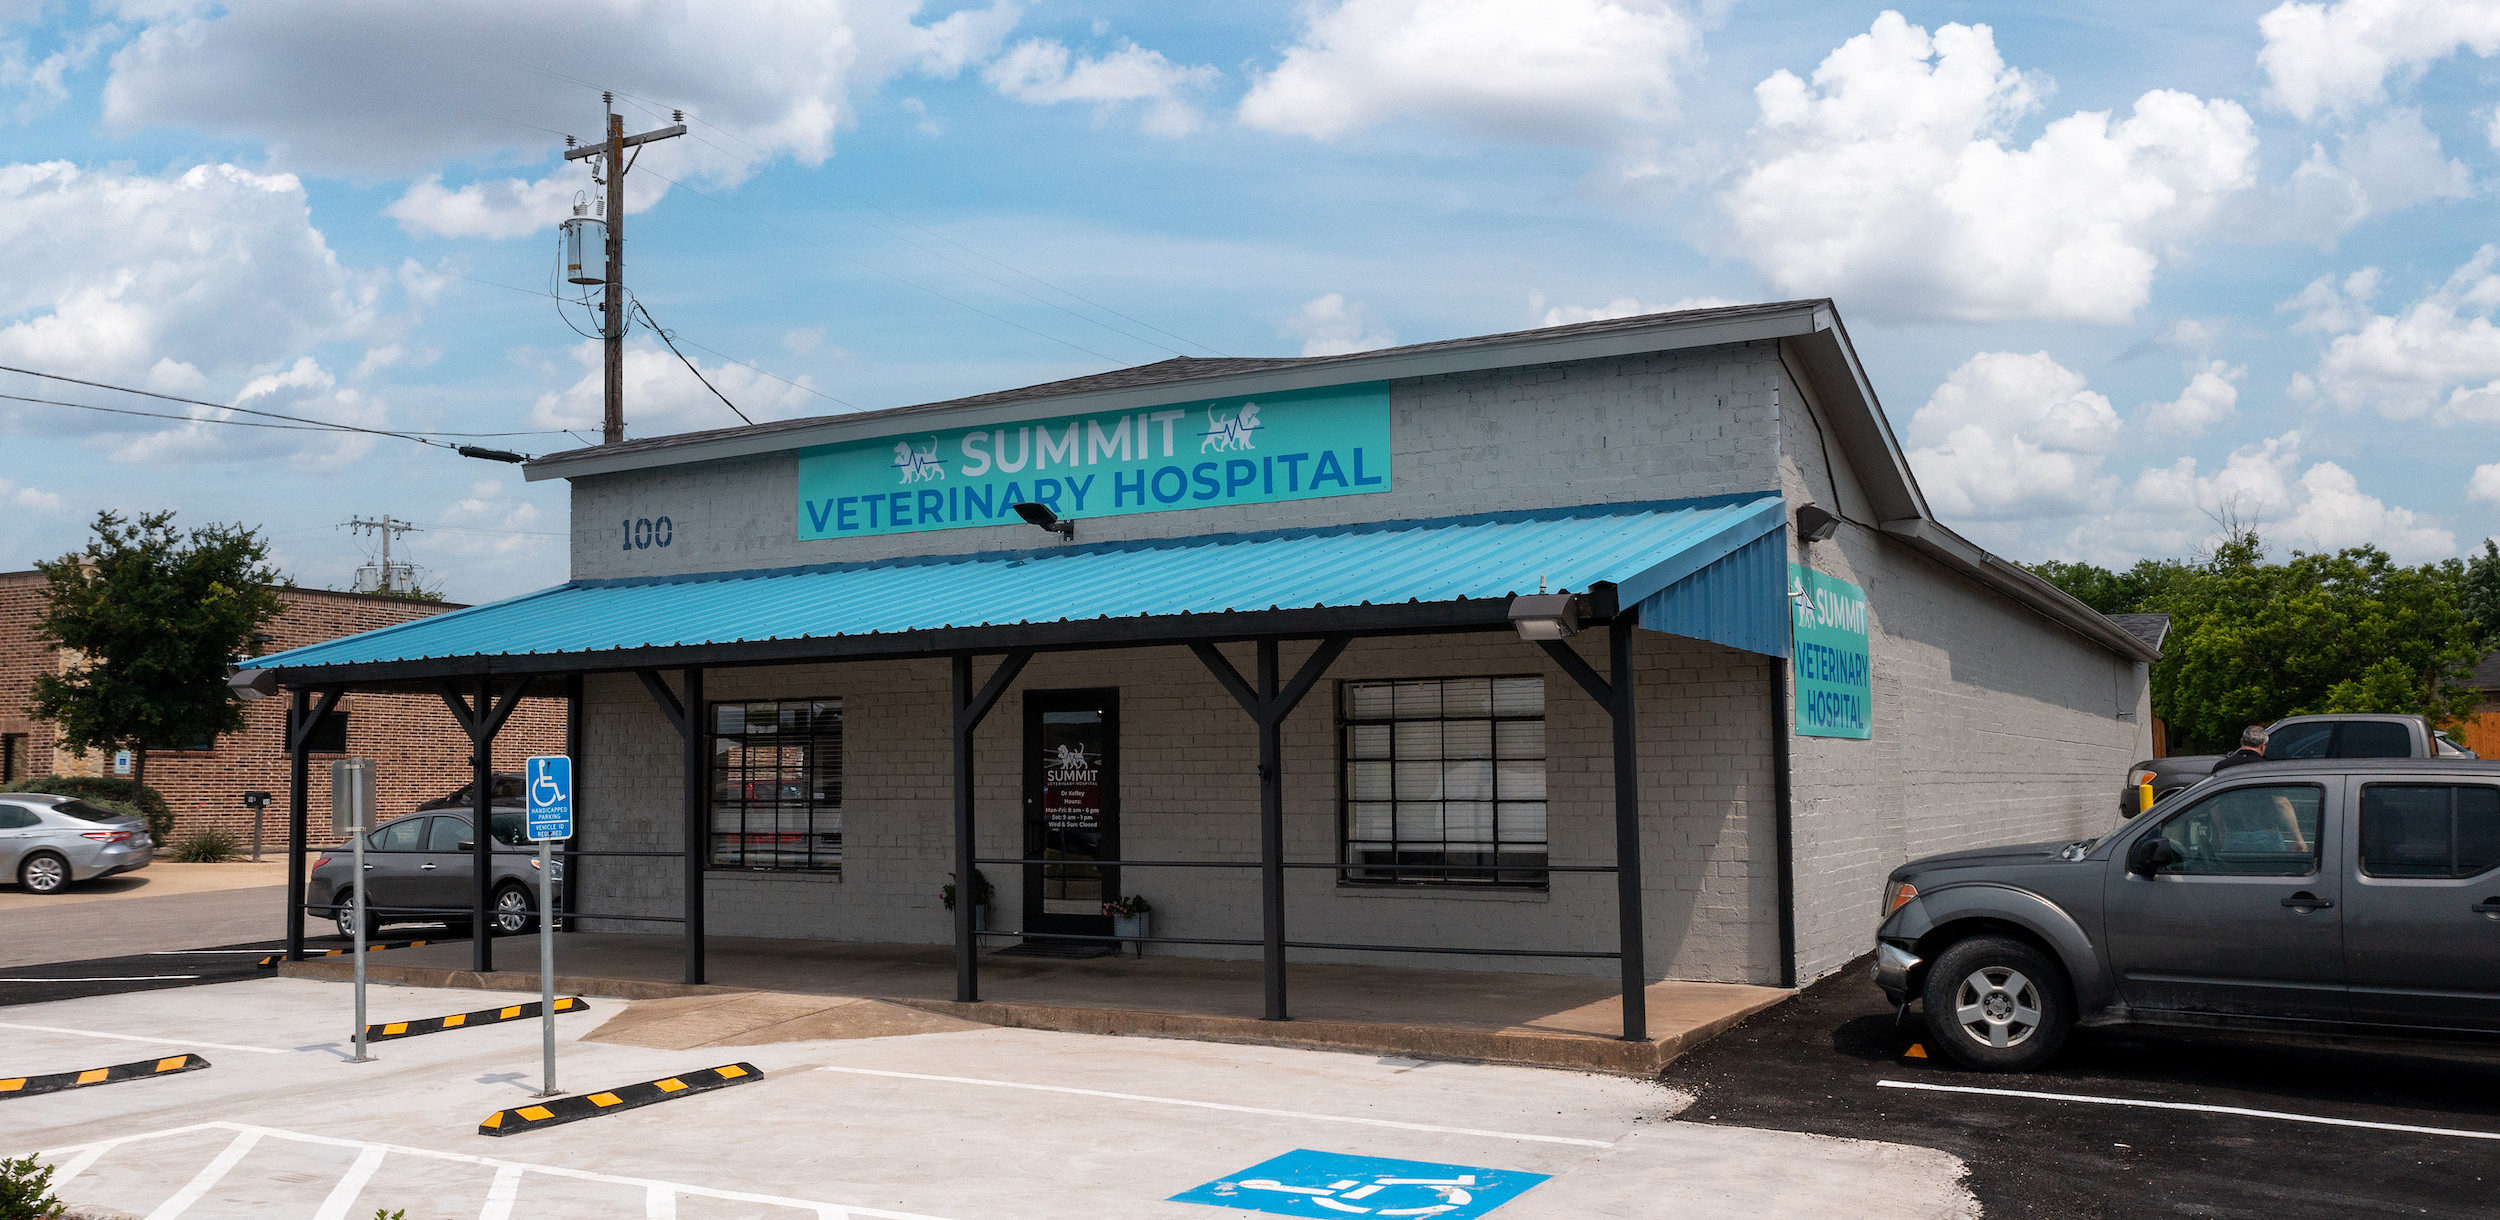 Summit Veterinary Hospital entrance